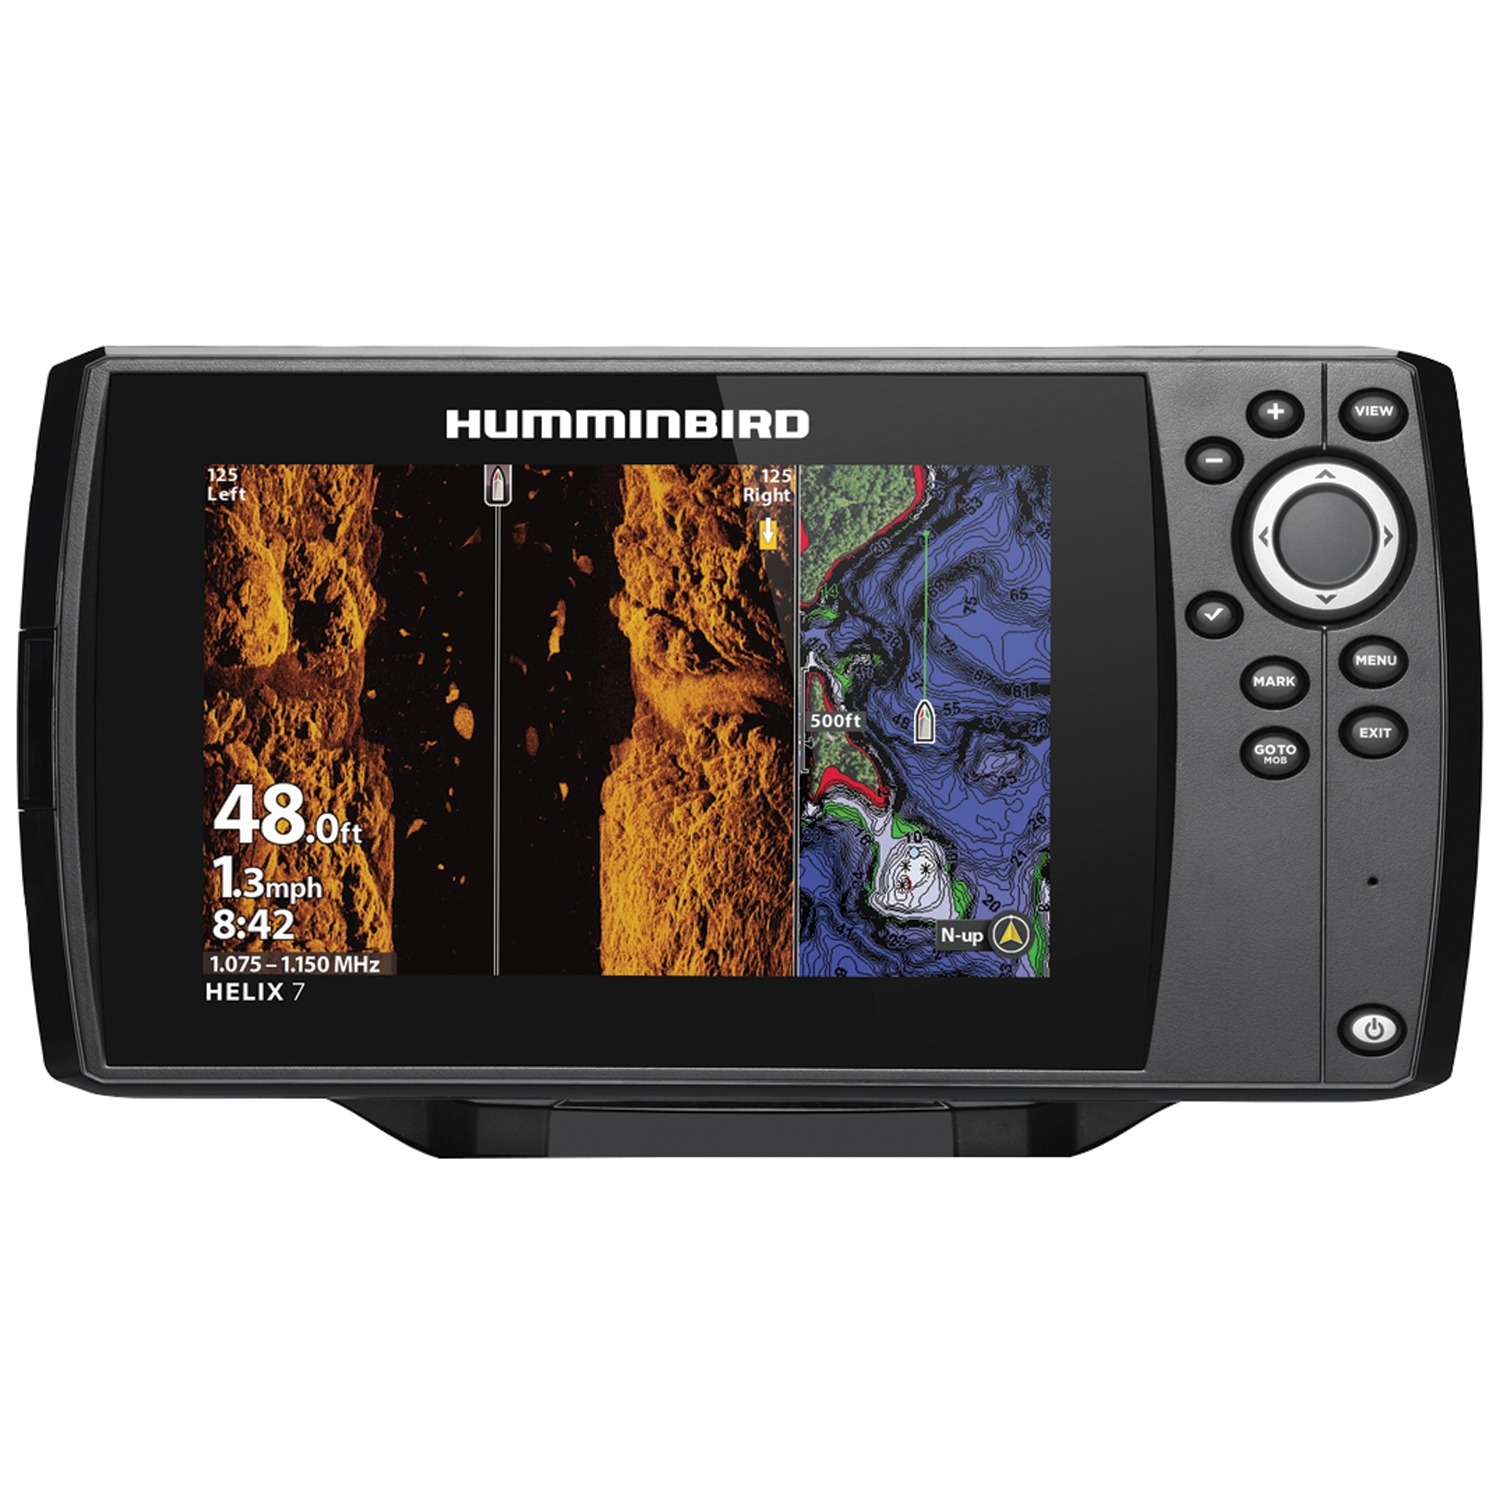 Humminbird 411080-1 HELIX 7 CHIRP Sonar G3N Dual Spectrum Combo Fishfinder/GPS/Chartplotter with MEGA Down & Side Imaging & 7" Display - image 4 of 6